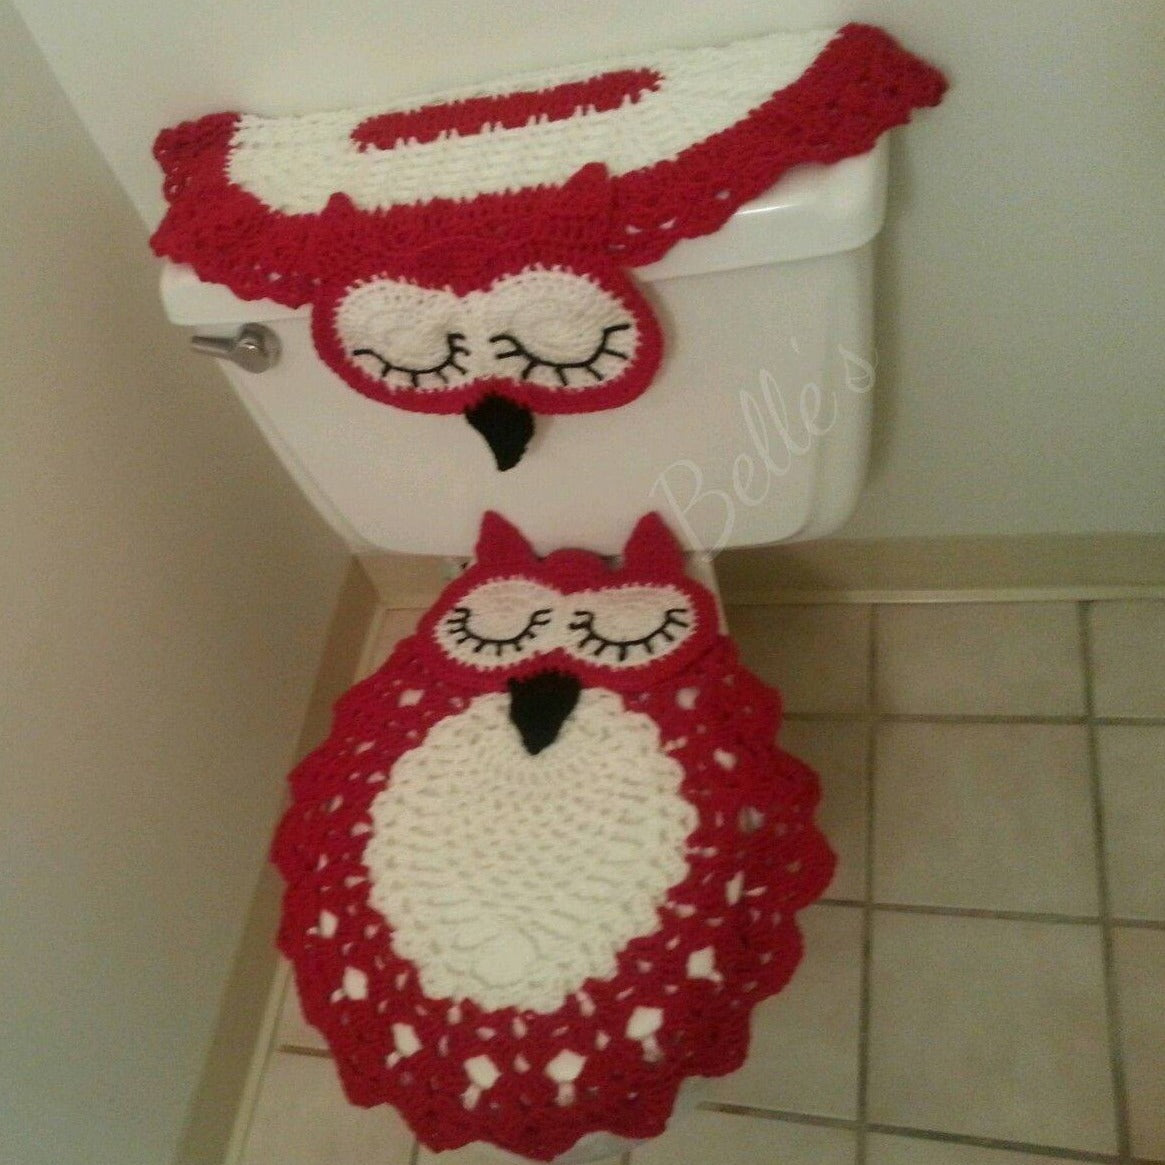 Red crochet bathroom cover